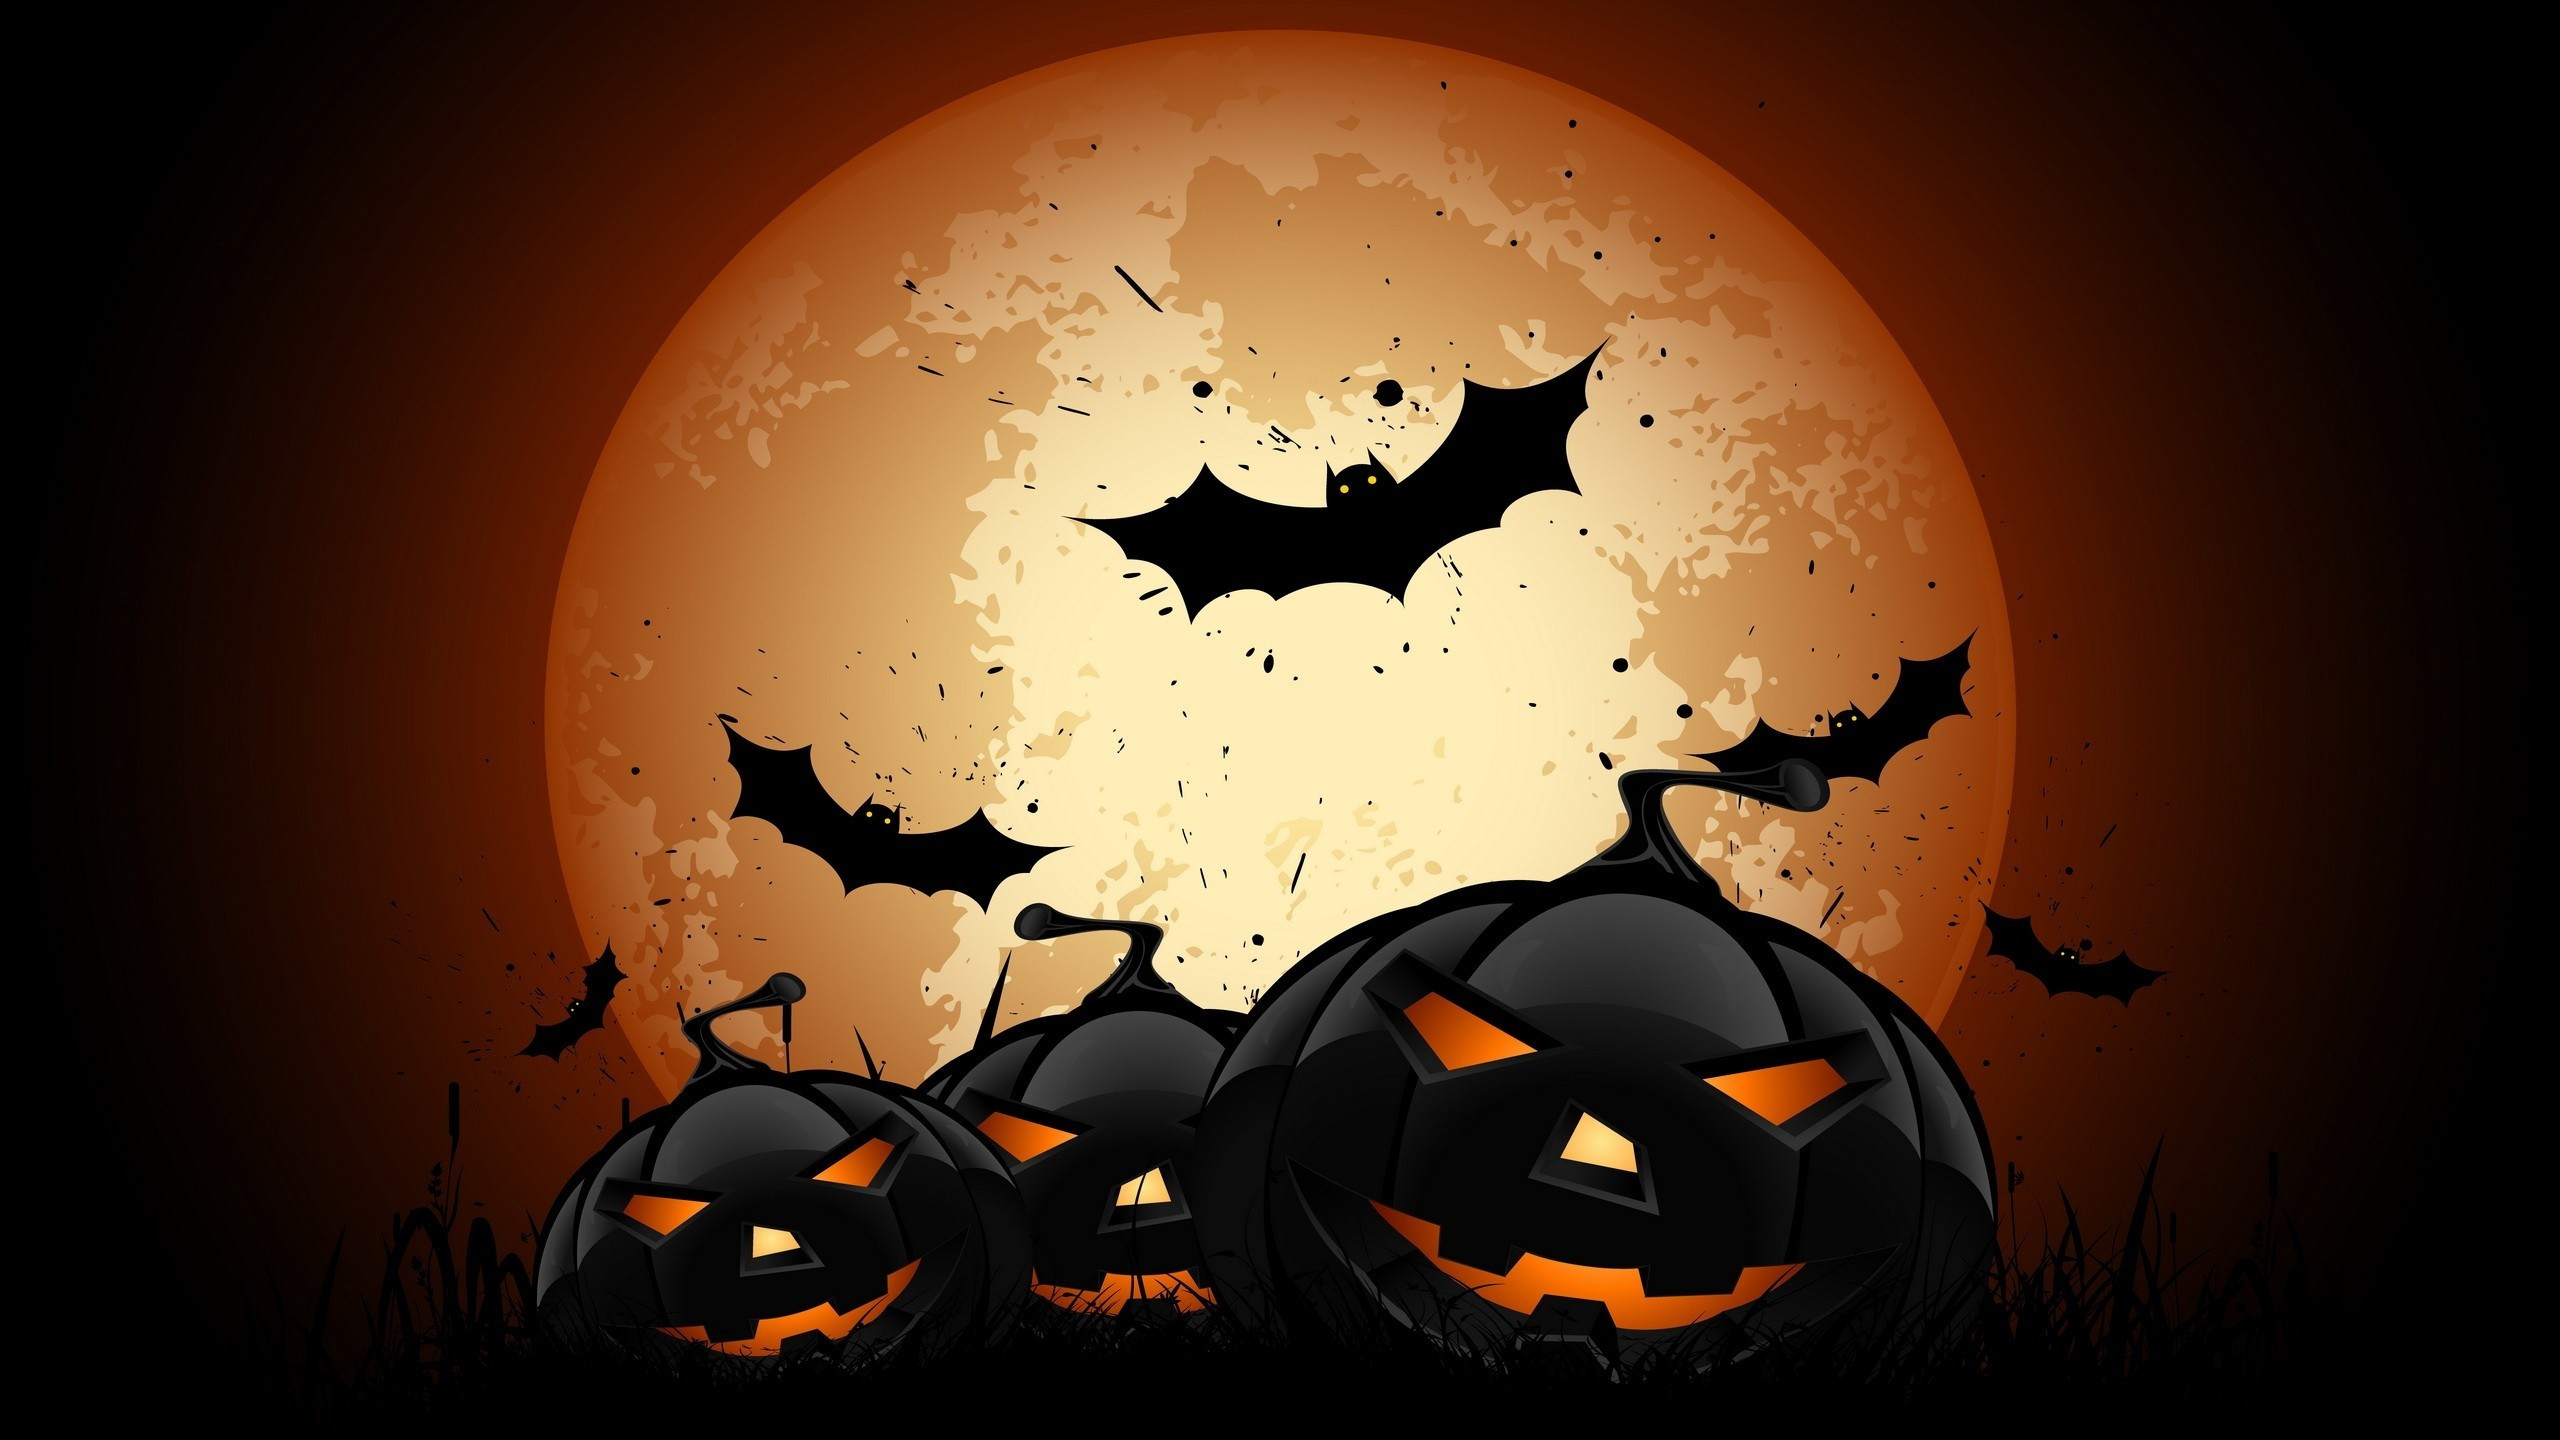 Download 2560x1440 Halloween, Black Pumpkins, Moon, Bats, Artwork, Moon, Dark Wallpaper for iMac 27 inch